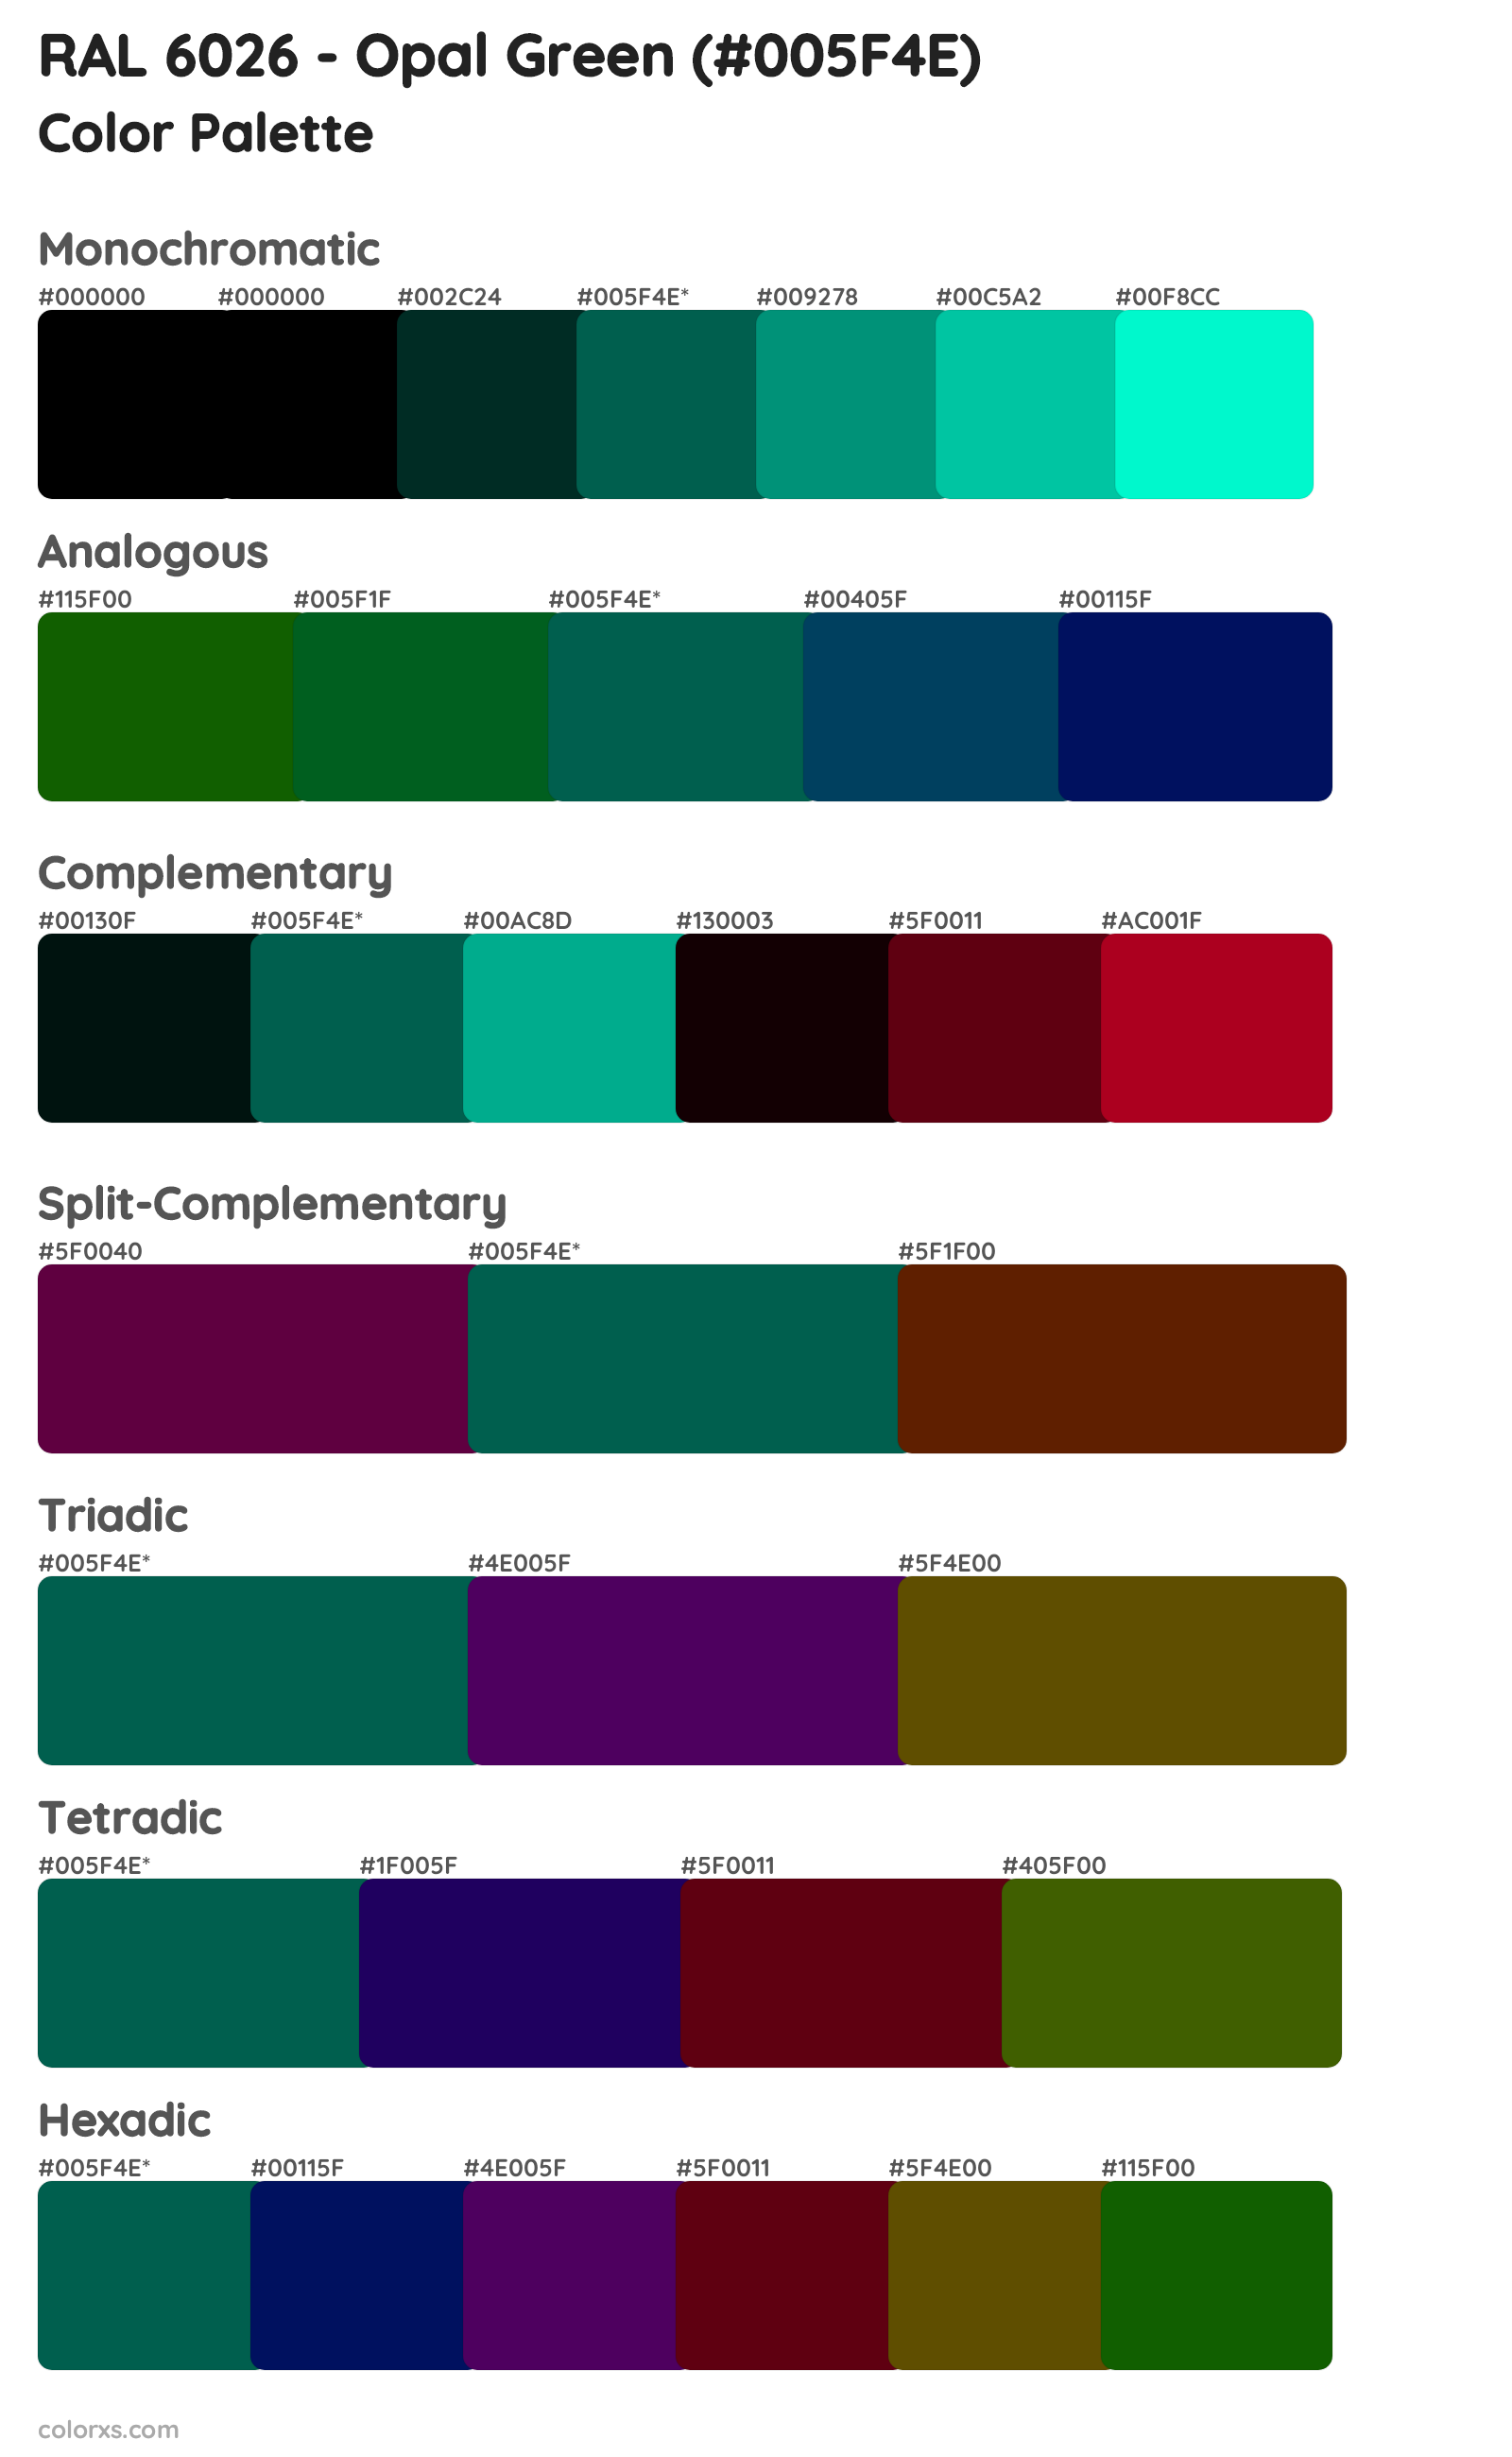 RAL 6026 - Opal Green Color Scheme Palettes